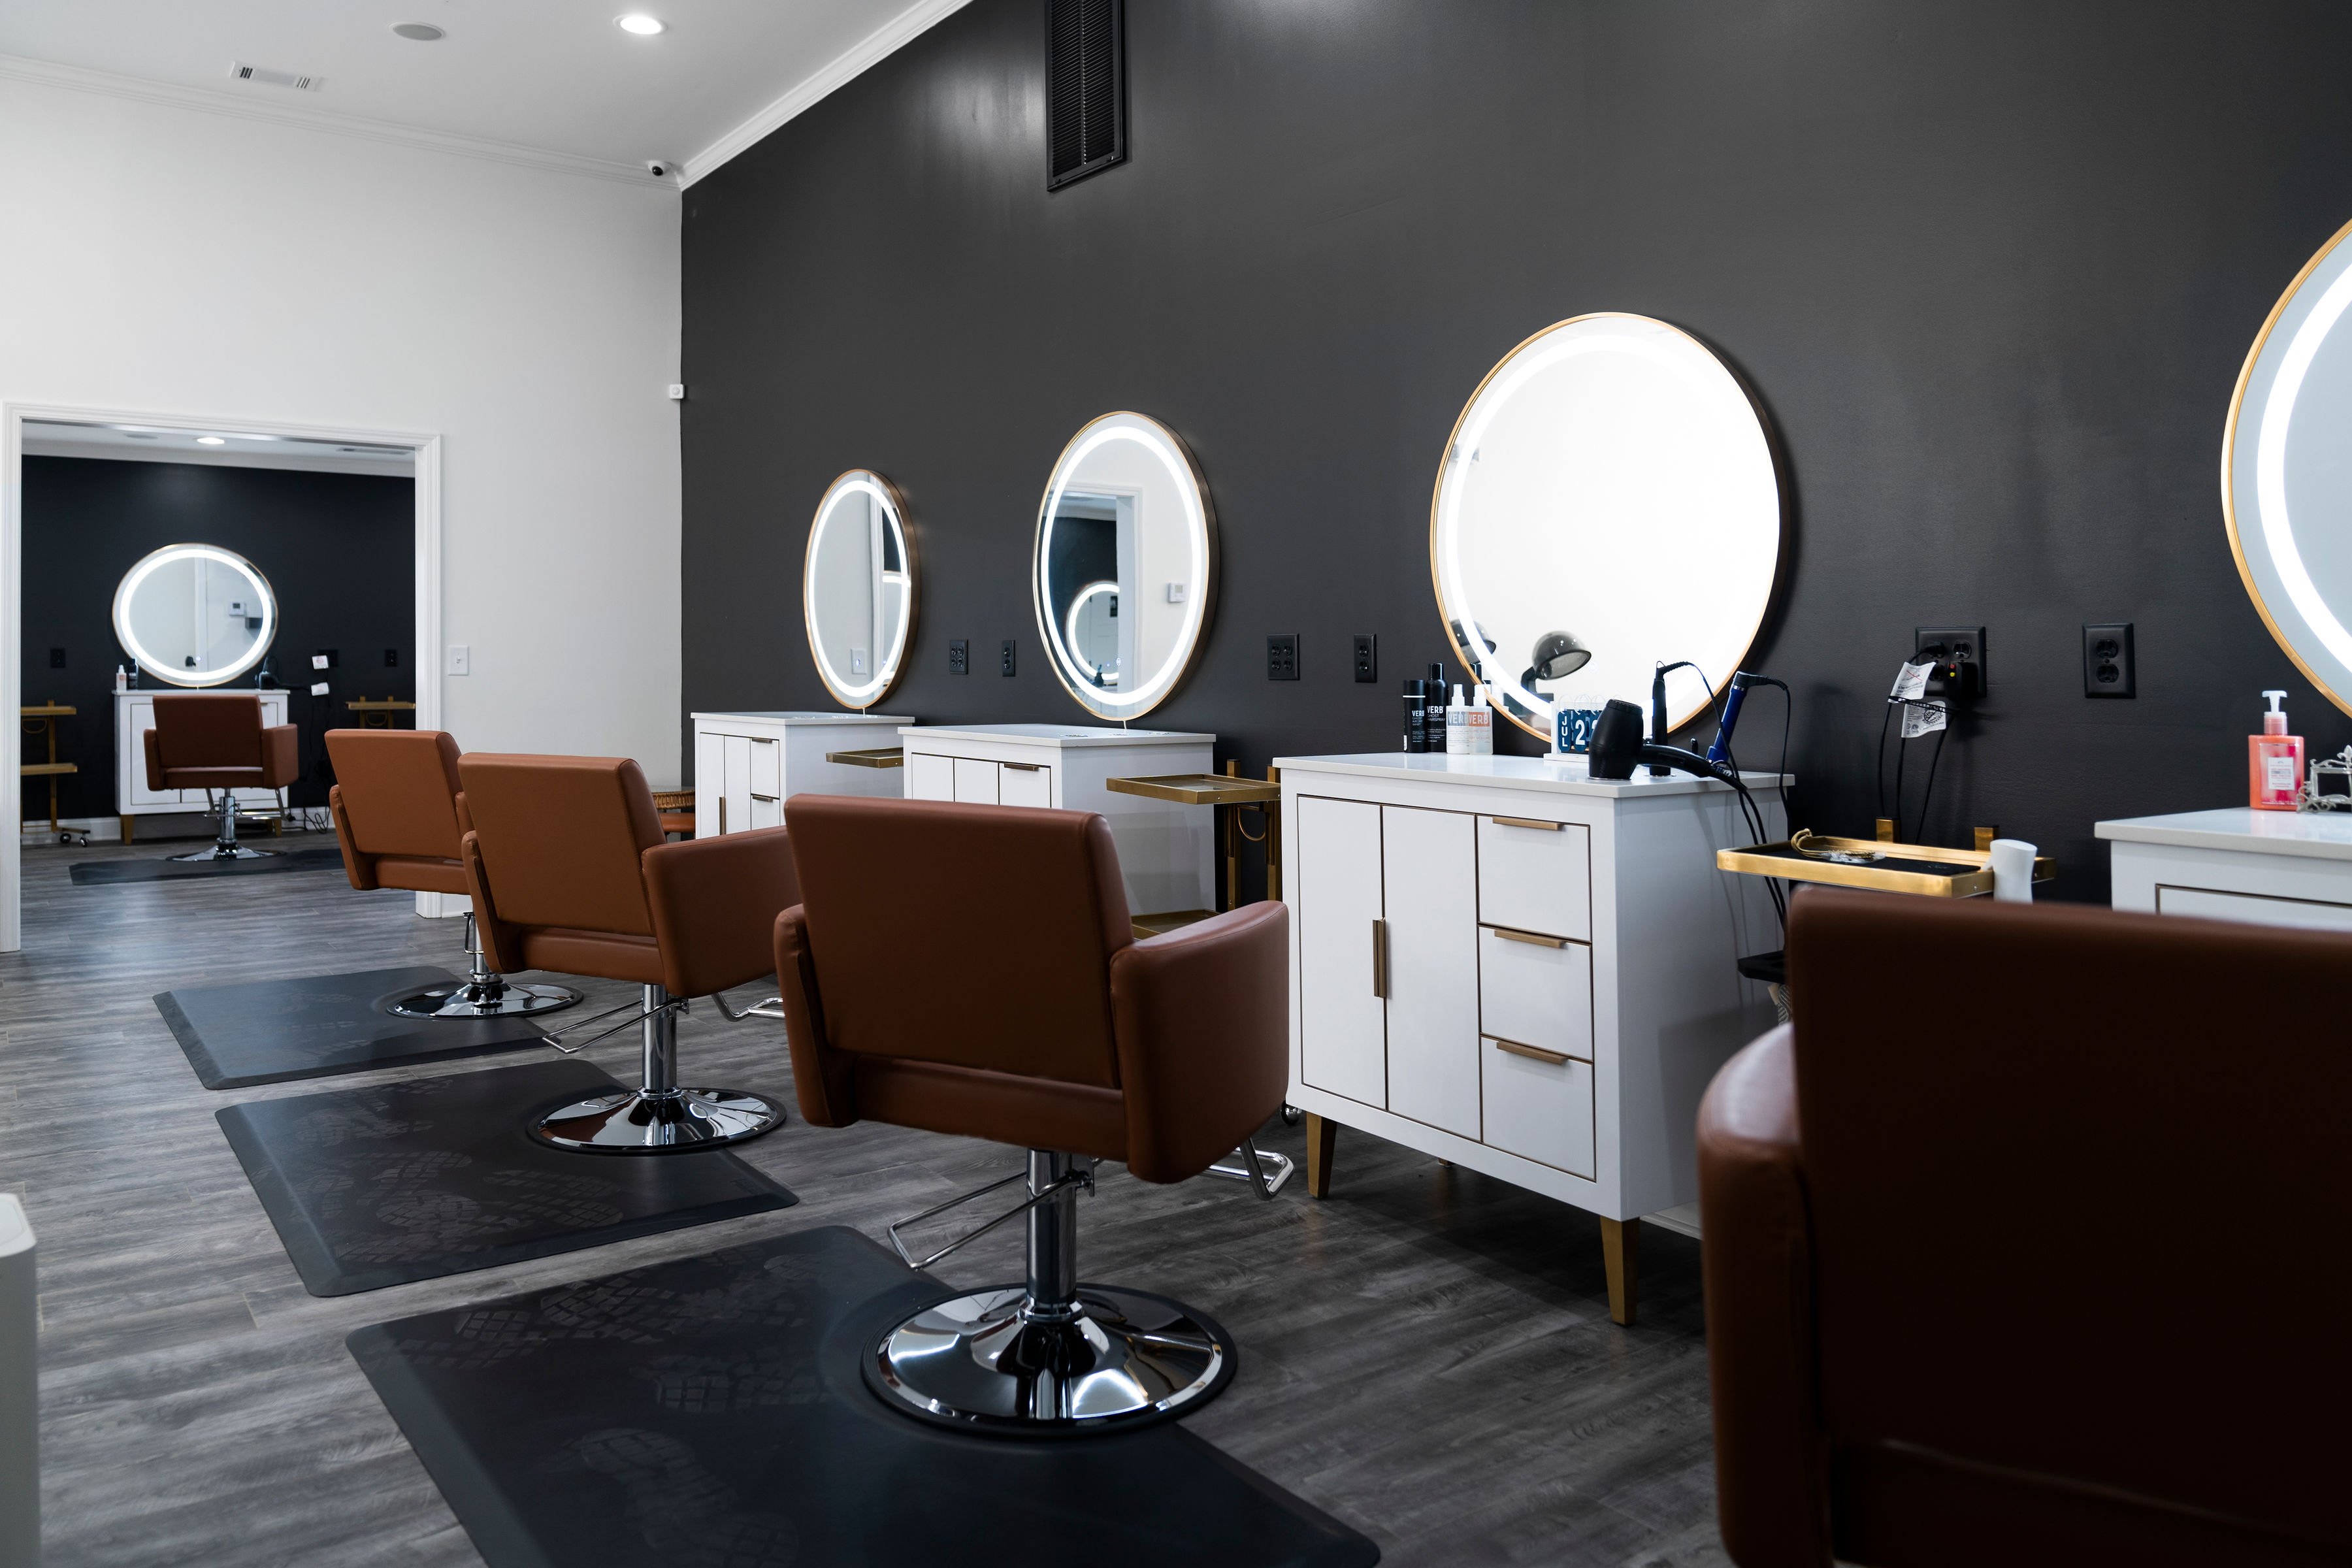 beauty salon pictures interior